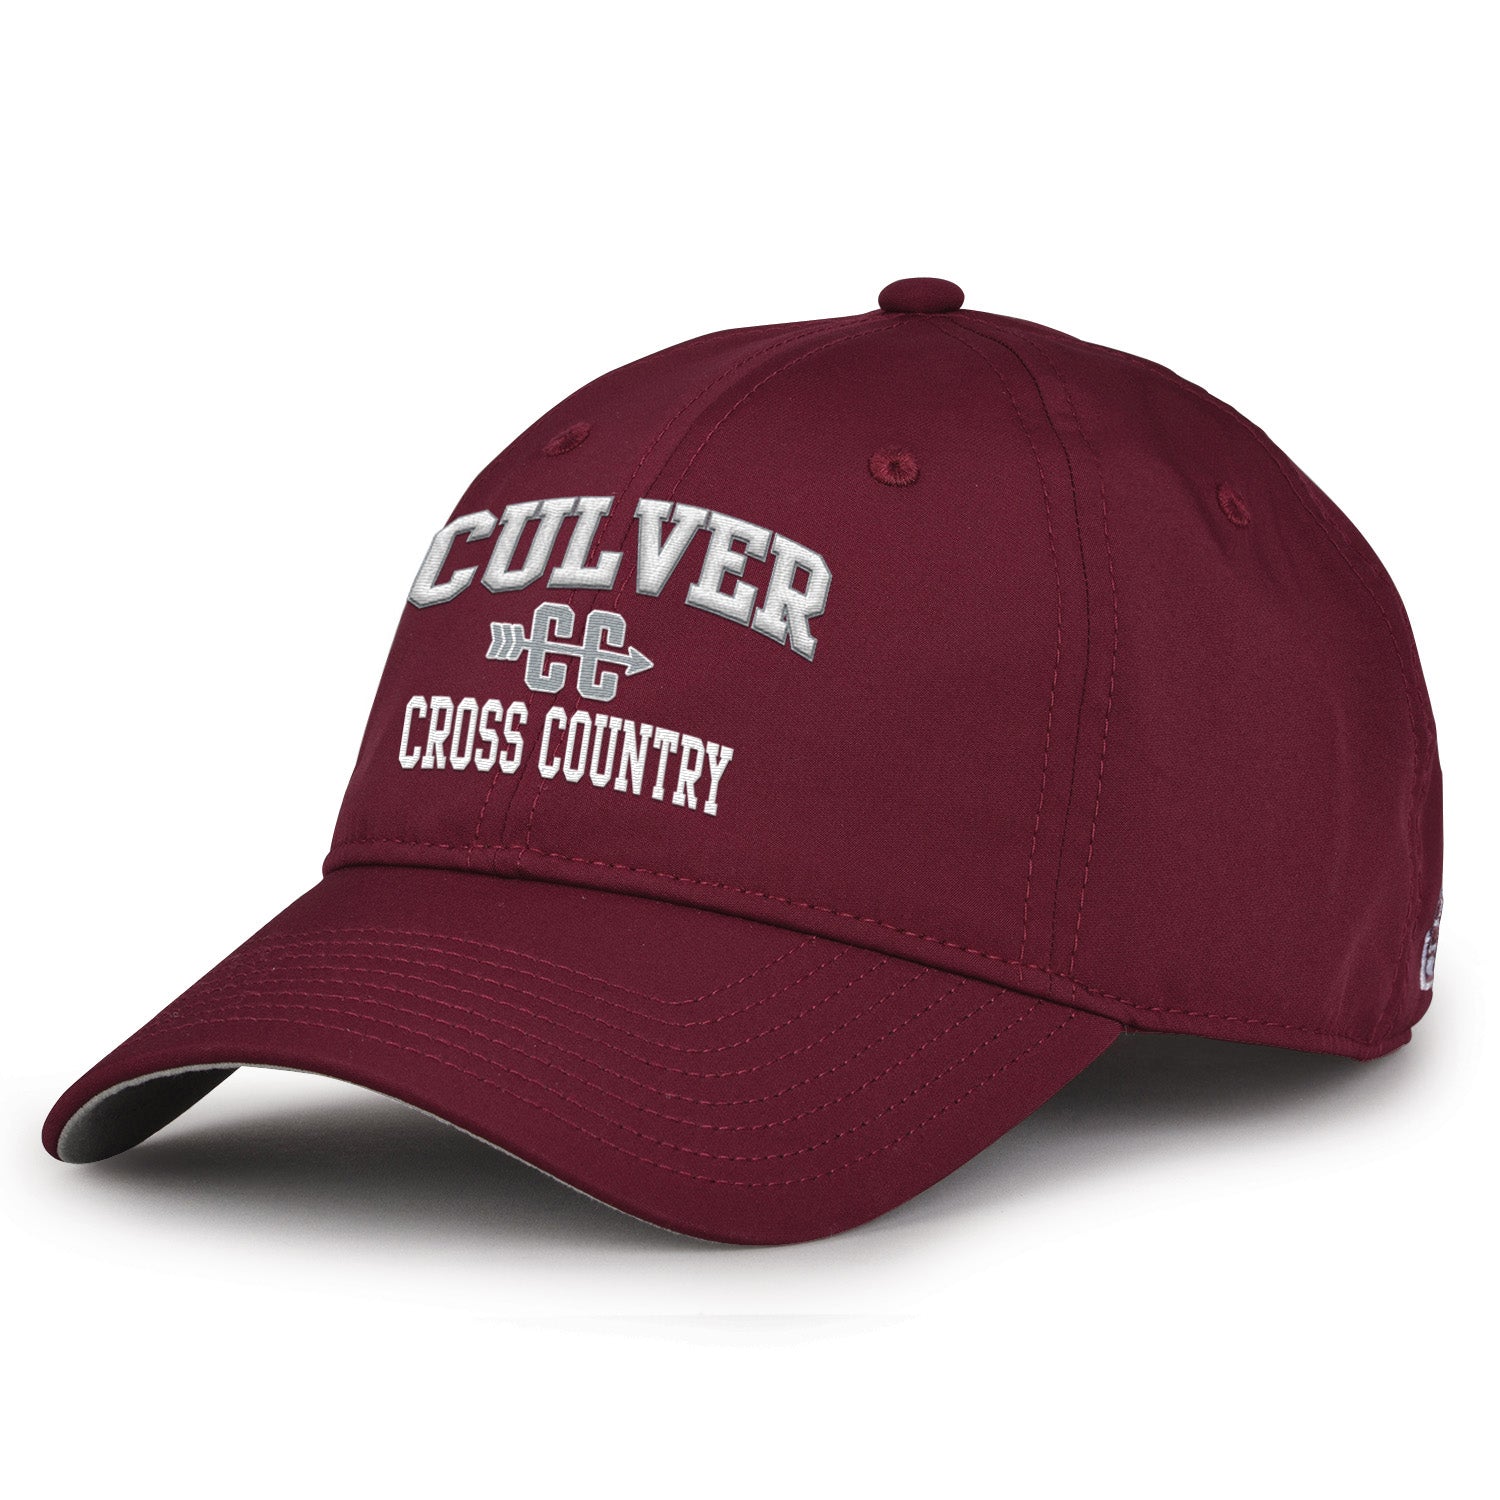 Cross Country Maroon Sport Hat